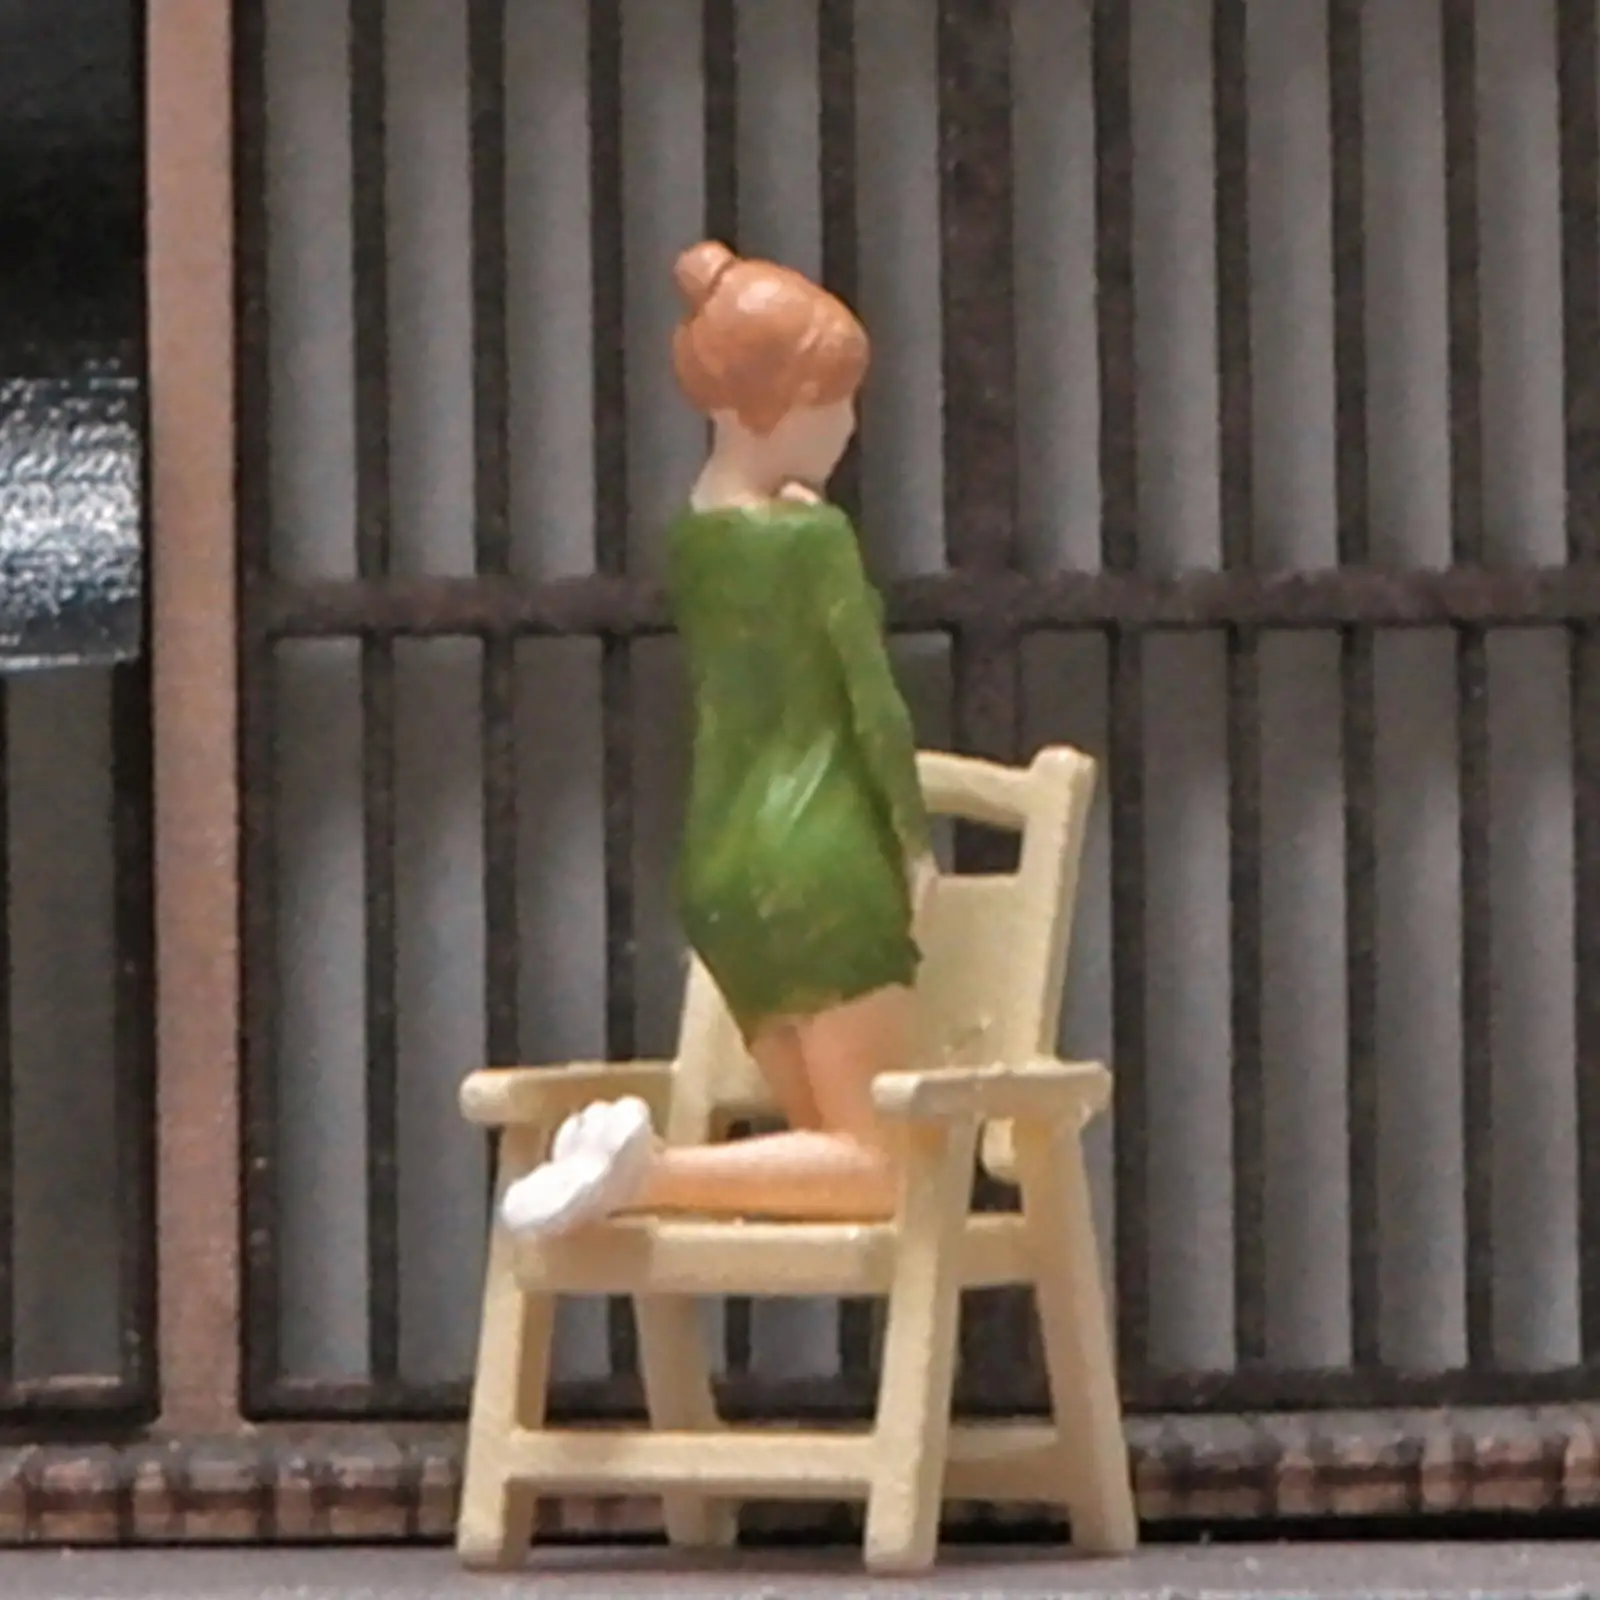 1/64 People Figures Girl Figures for Miniature Scene Photography Props Decor